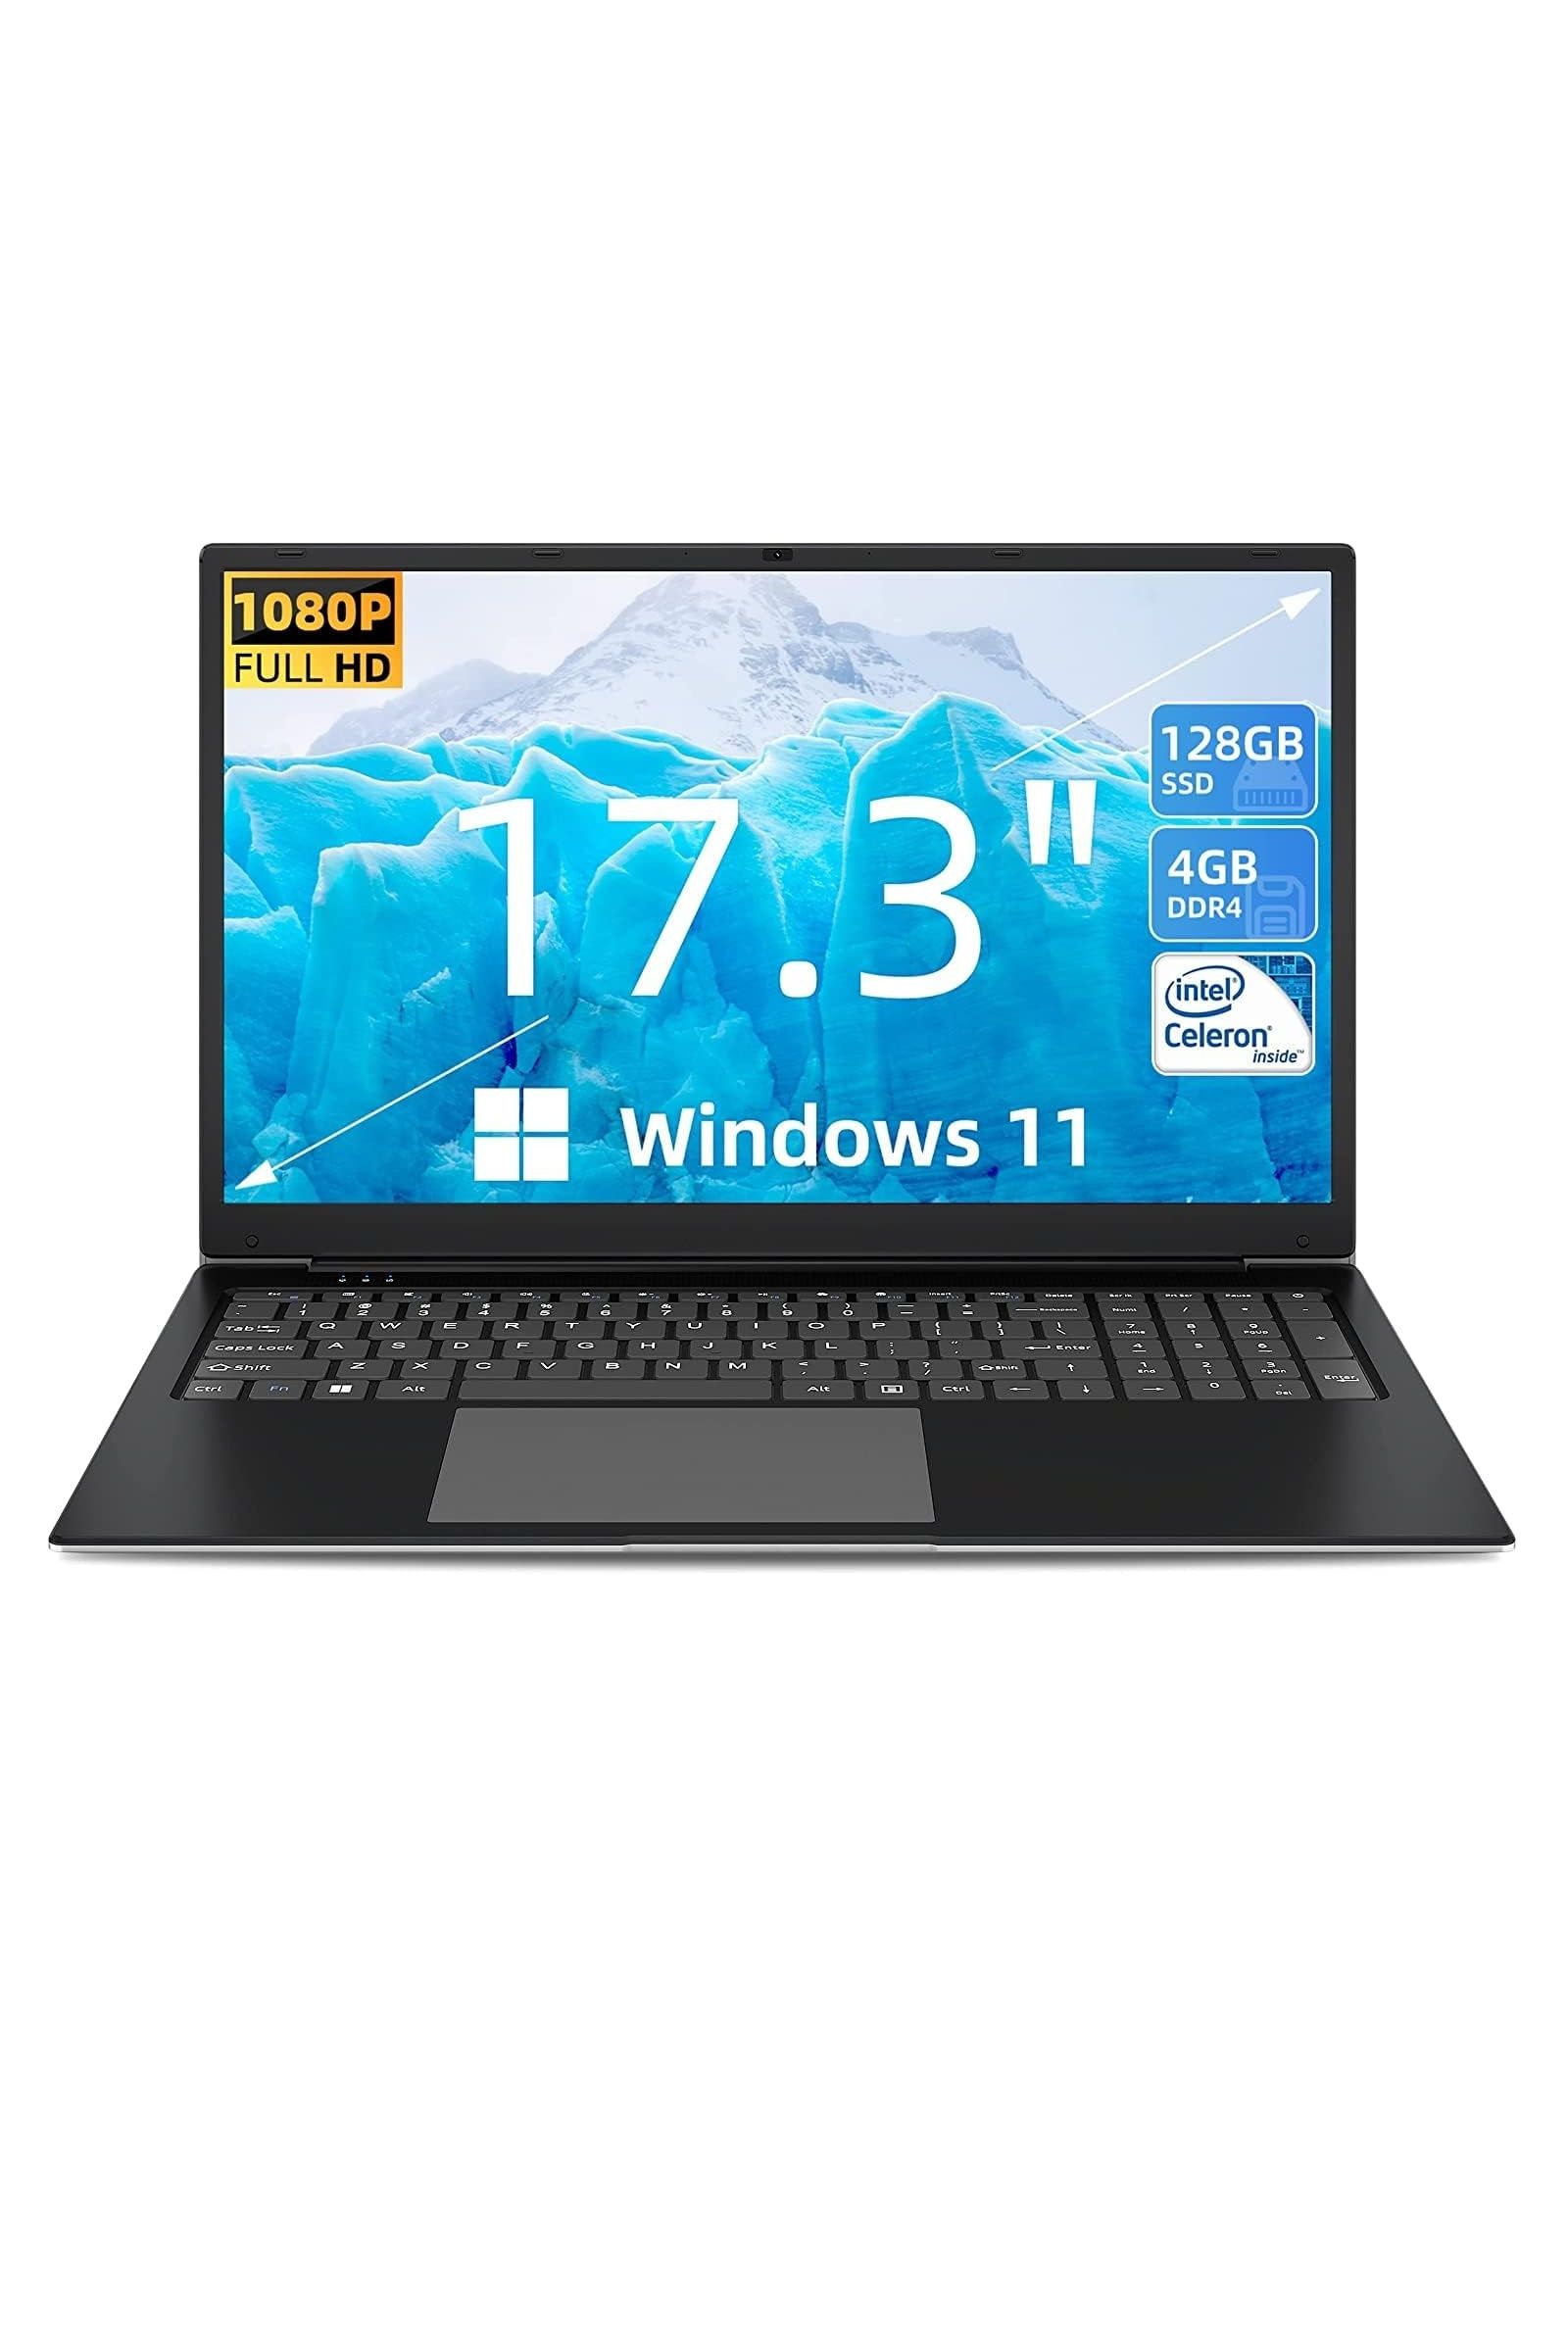 SGIN 17 Inch Laptop, Laptops with IPS Display, 4GB RAM 128GB SSD Computer,  Intel Celeron Quad Core J4105(Up to 2.5 GHz), Mini HDMI, Webcam, Dual